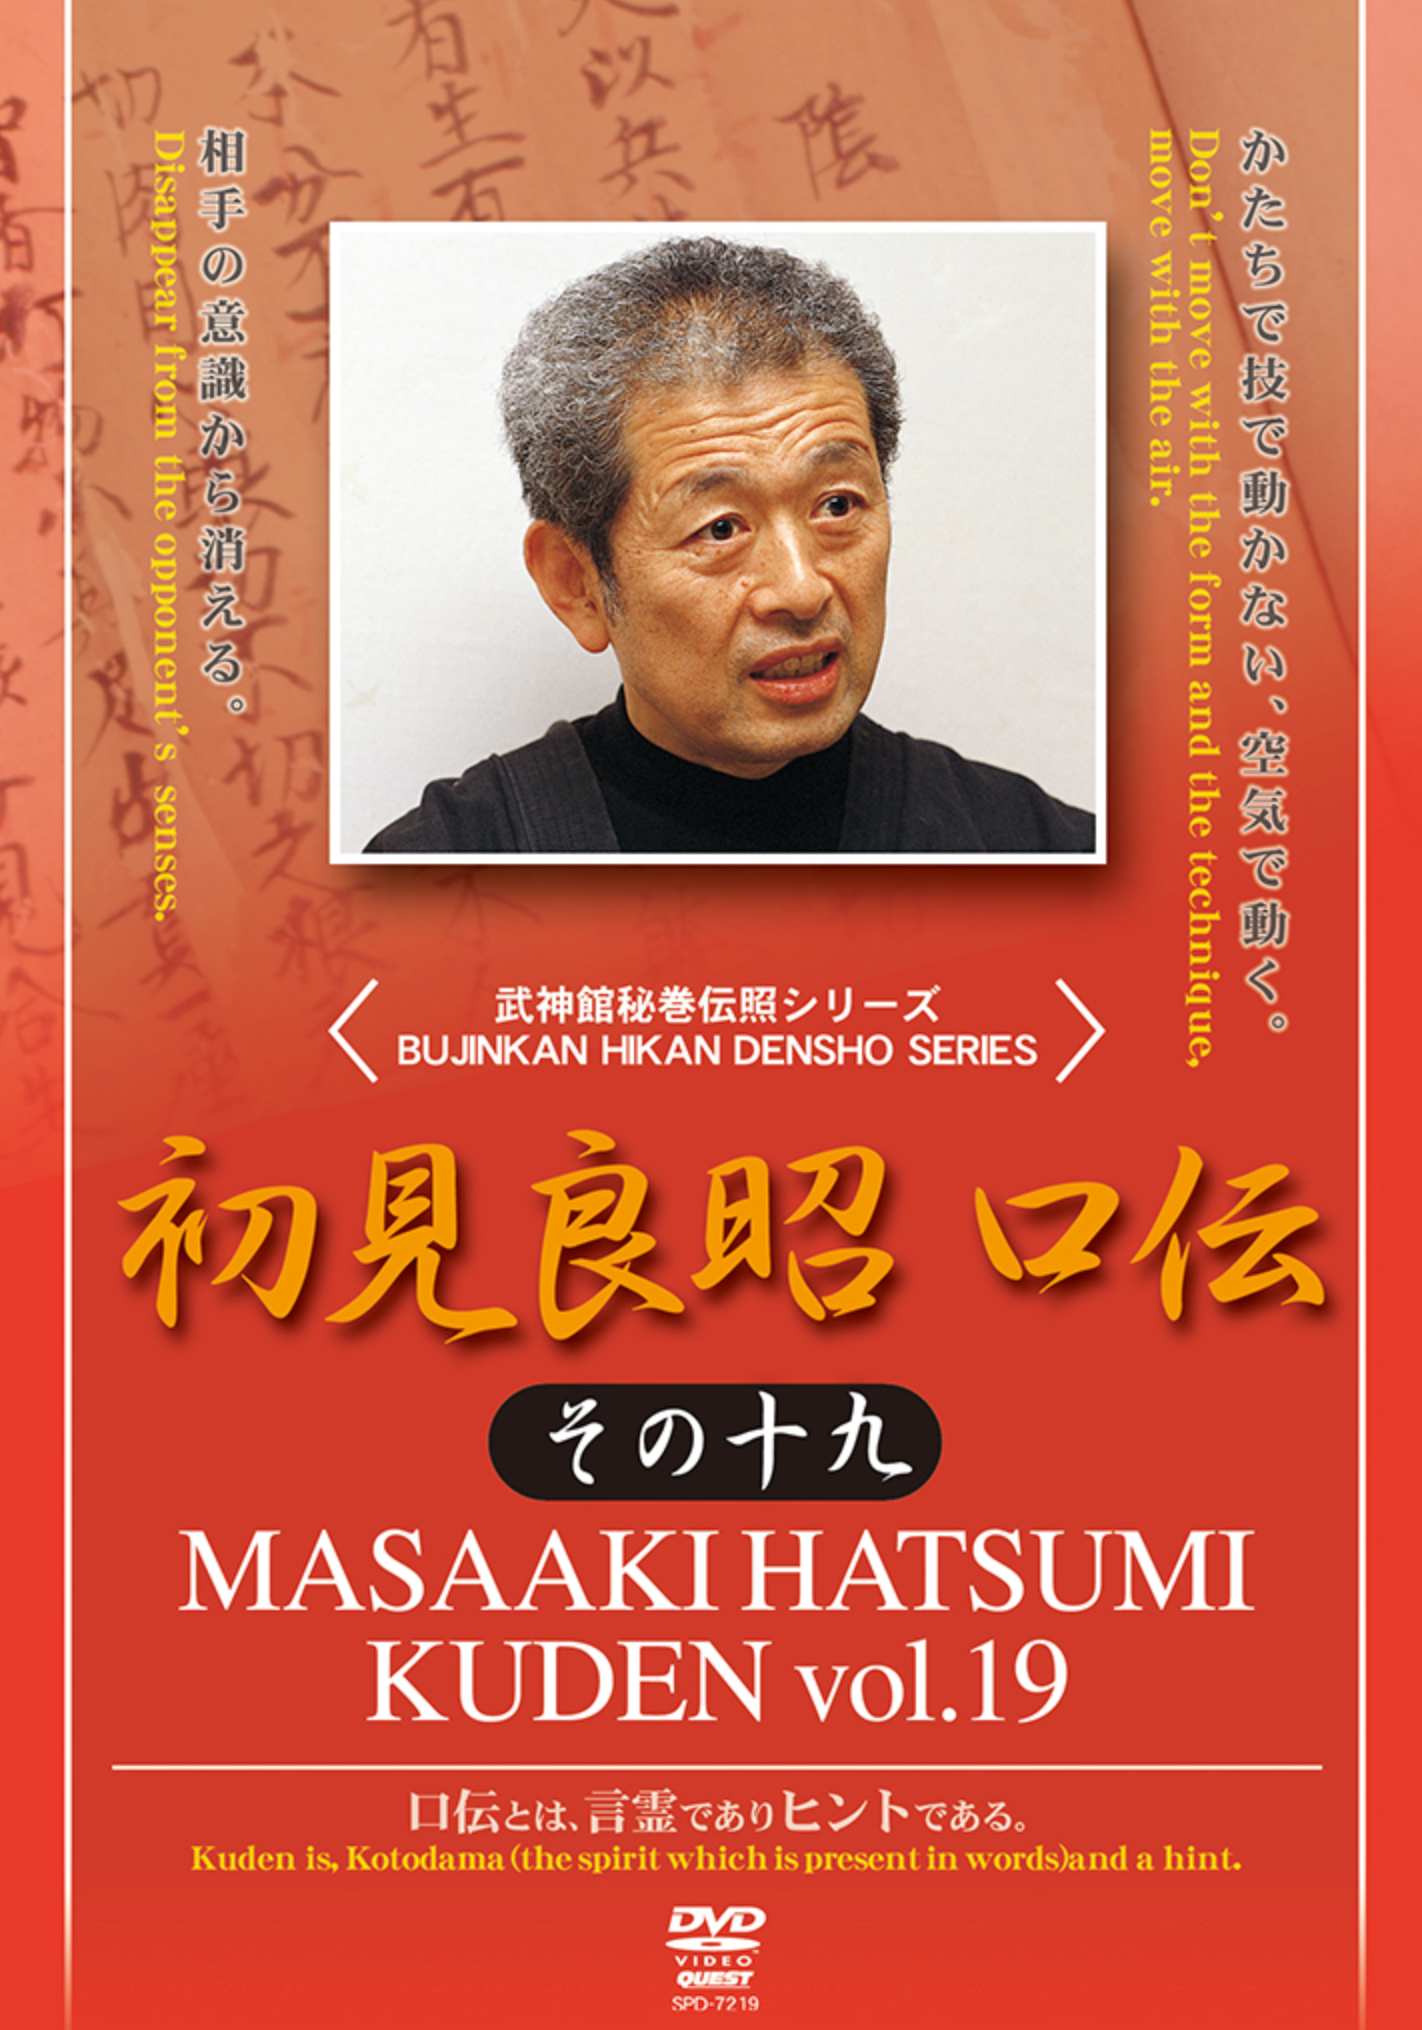 Kuden Vol 19 DVD with Masaaki Hatsumi - Budovideos Inc